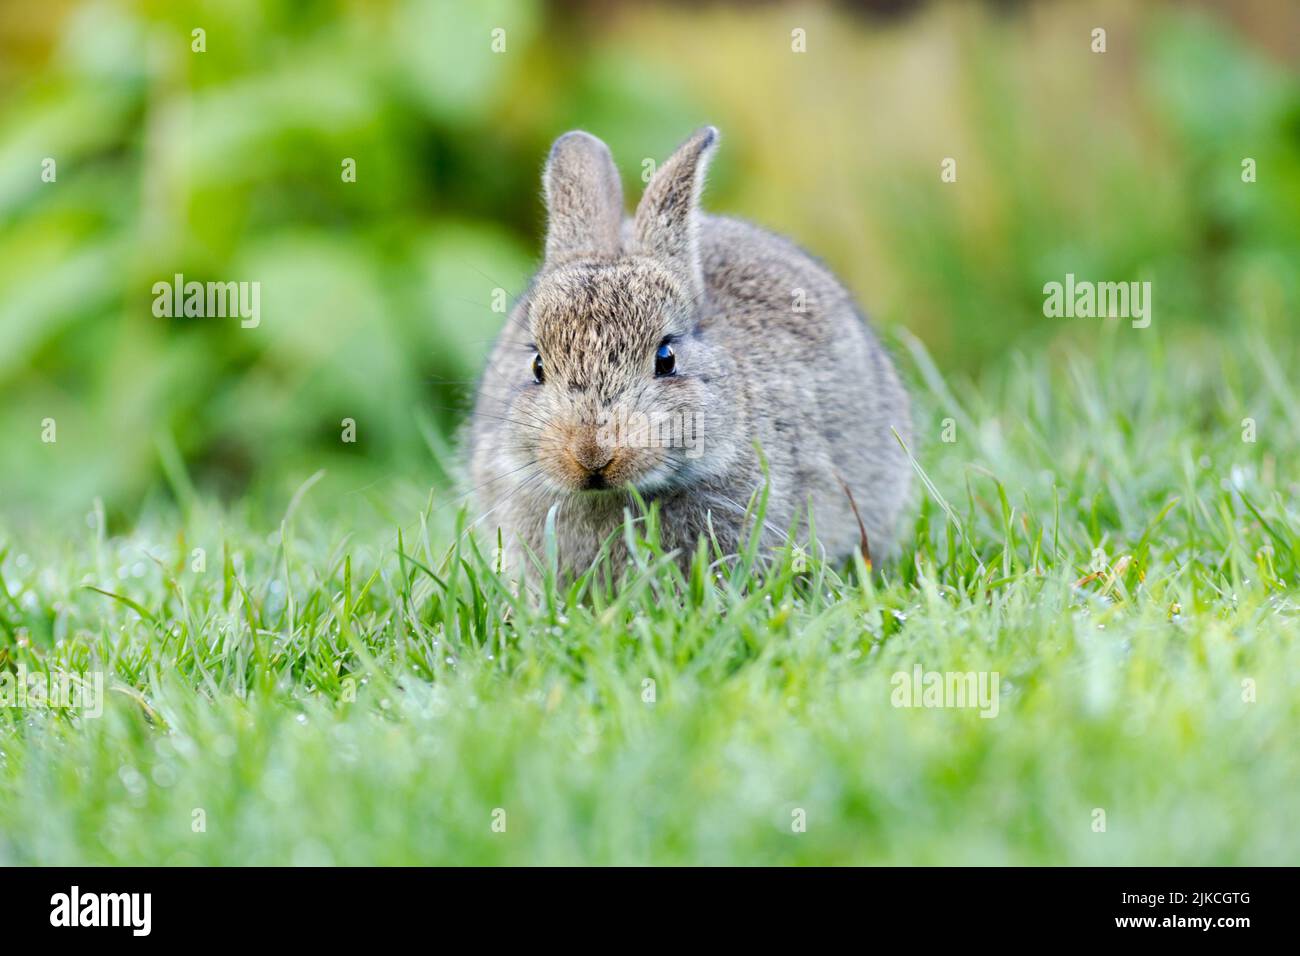 Wild rabbit, Latin name Oryctolagus cuniculus, grazing on a garden lawn Stock Photo